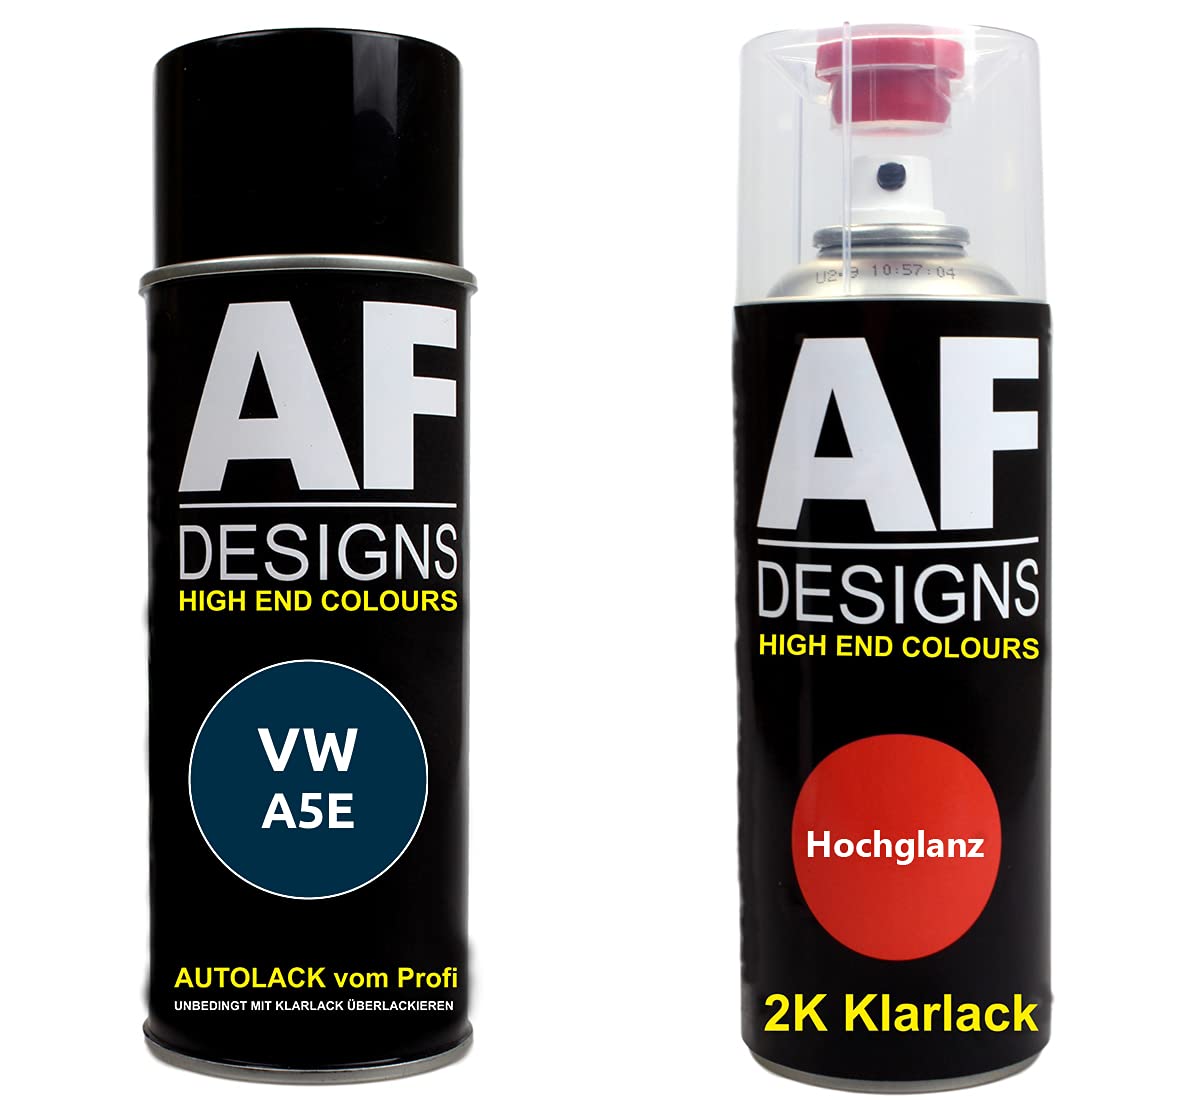 Alex Flittner Designs Autolack Spraydose Set für VW A5E Maritimblau 2K Klarlack Basislack Sprühdose Spraydosen 2x400ml von Alex Flittner Designs